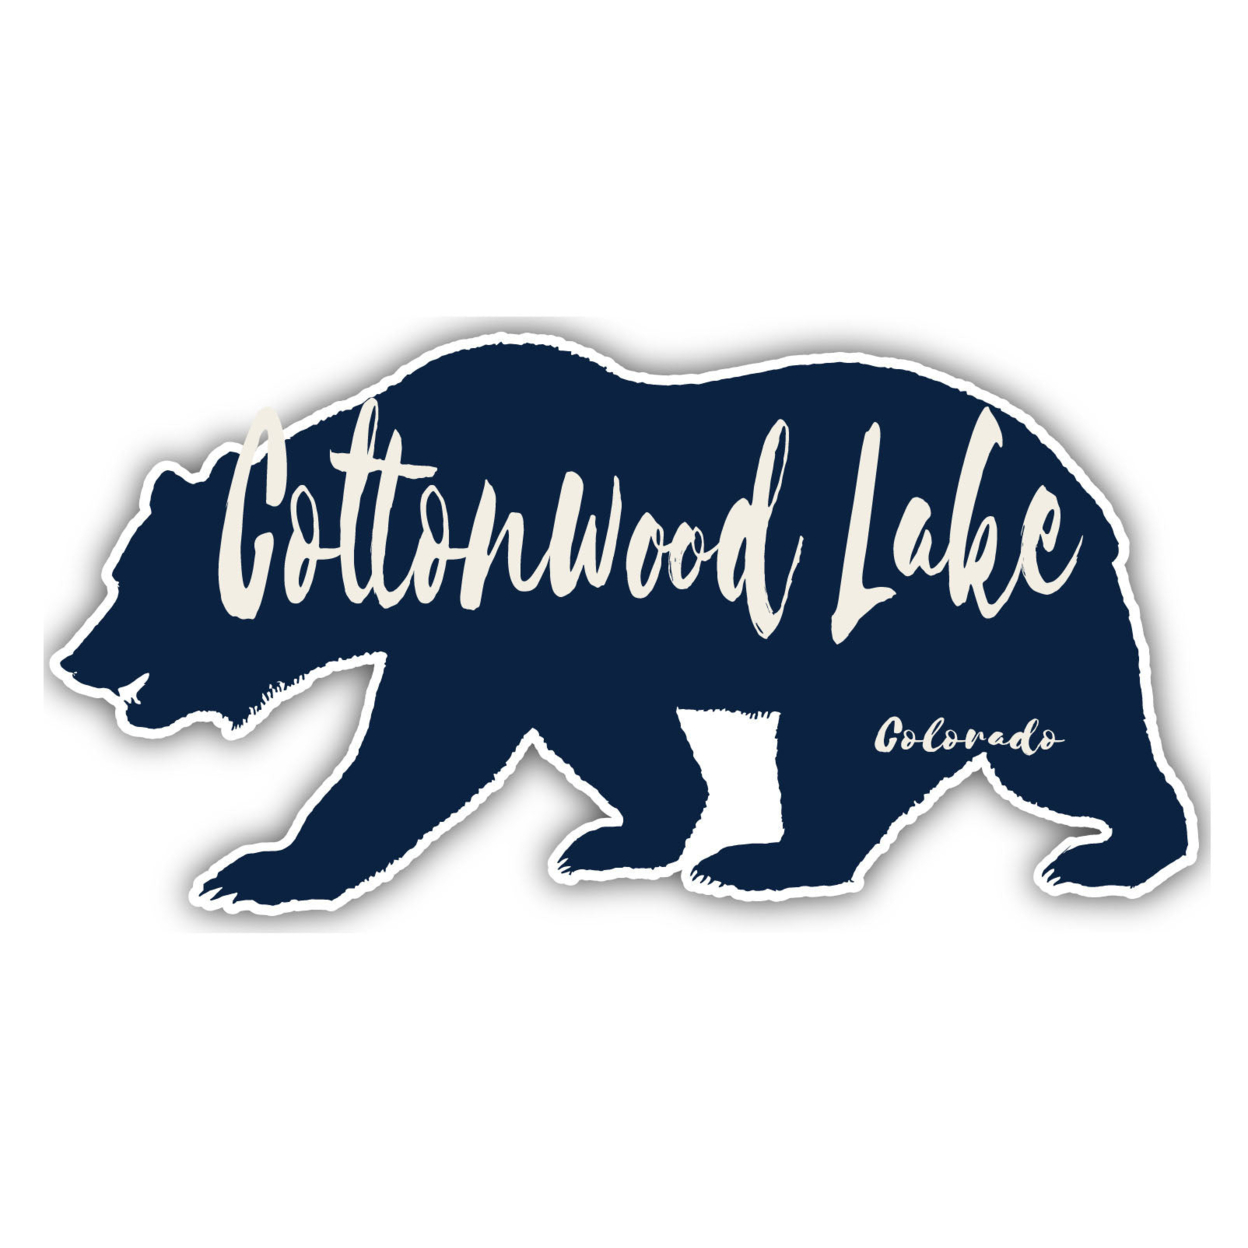 Cottonwood Lake Colorado Souvenir Decorative Stickers (Choose Theme And Size) - Single Unit, 8-Inch, Tent